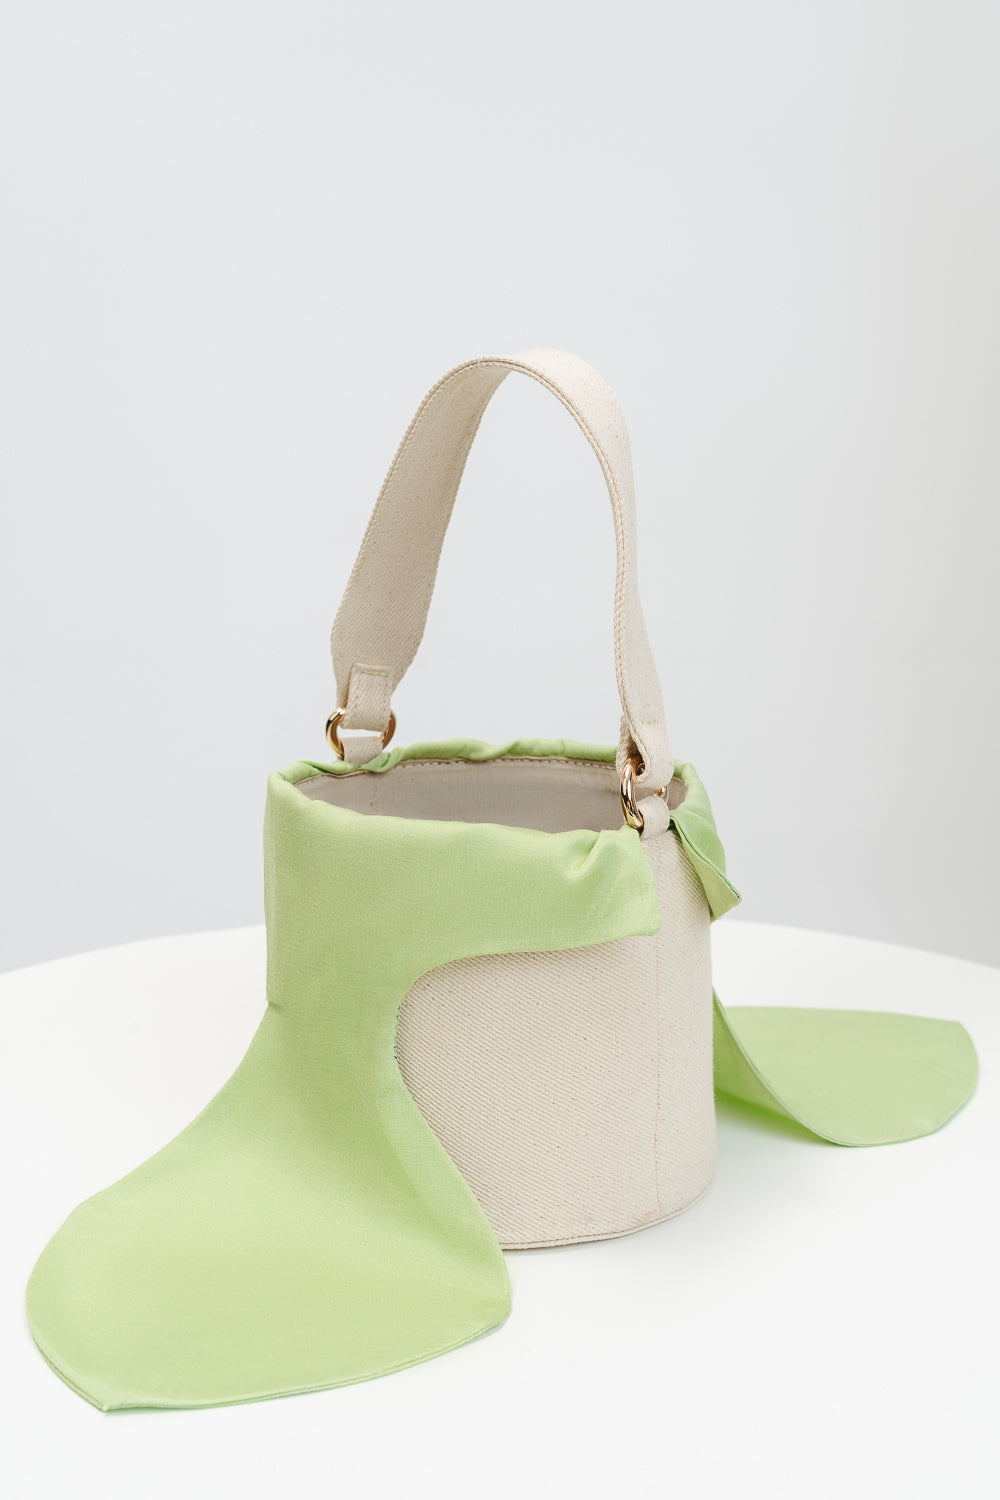 The White-Green Bucket Bag